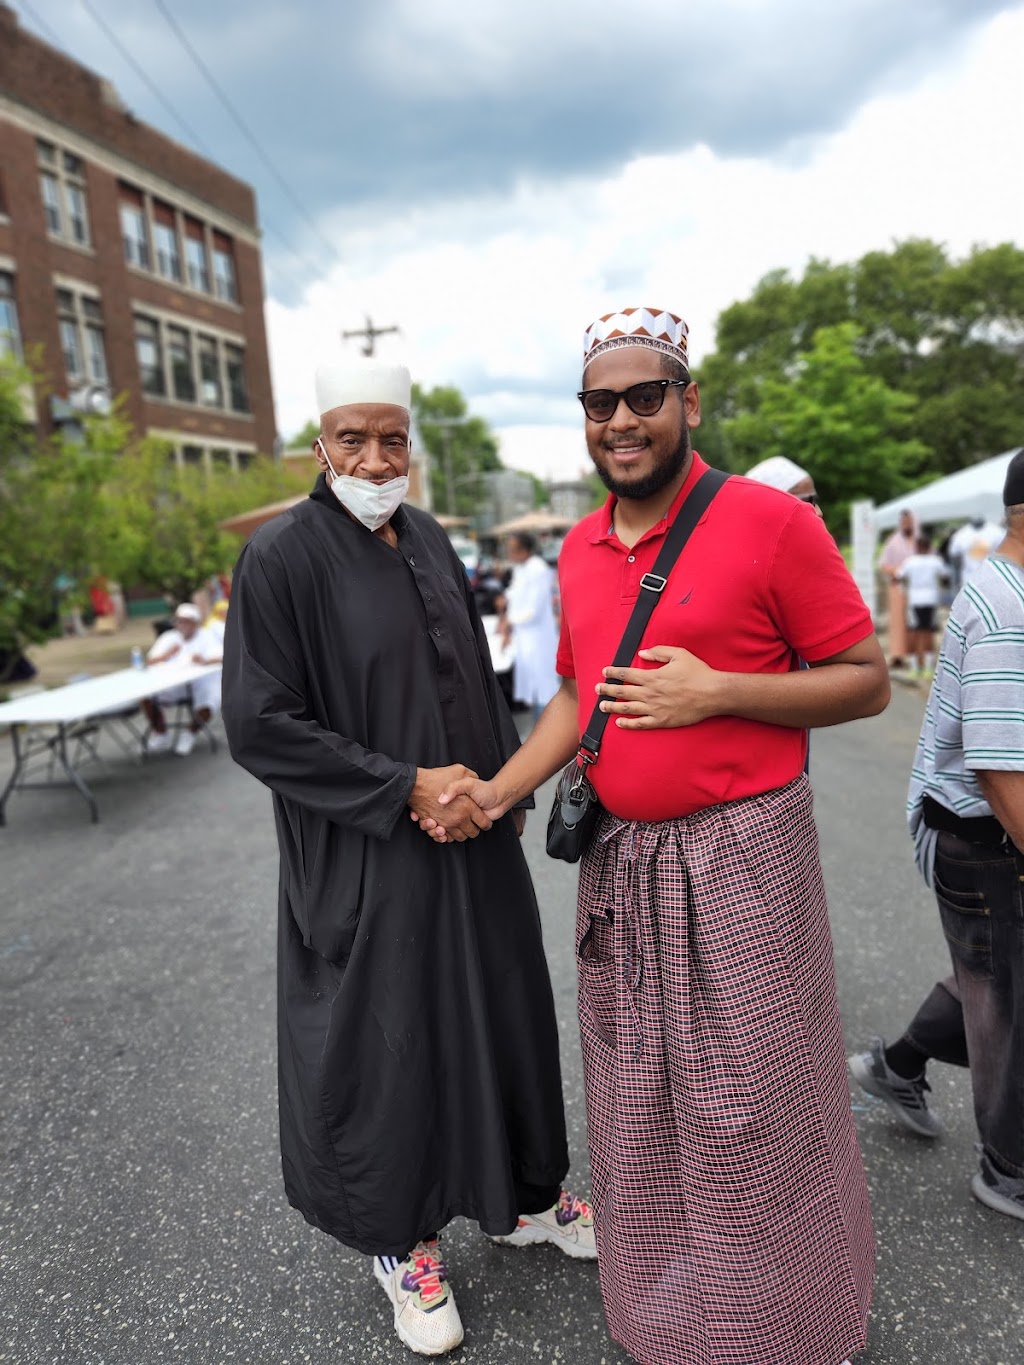 Philadelphia Masjid Inc | 4700 Wyalusing Ave, Philadelphia, PA 19131 | Phone: (215) 877-2800